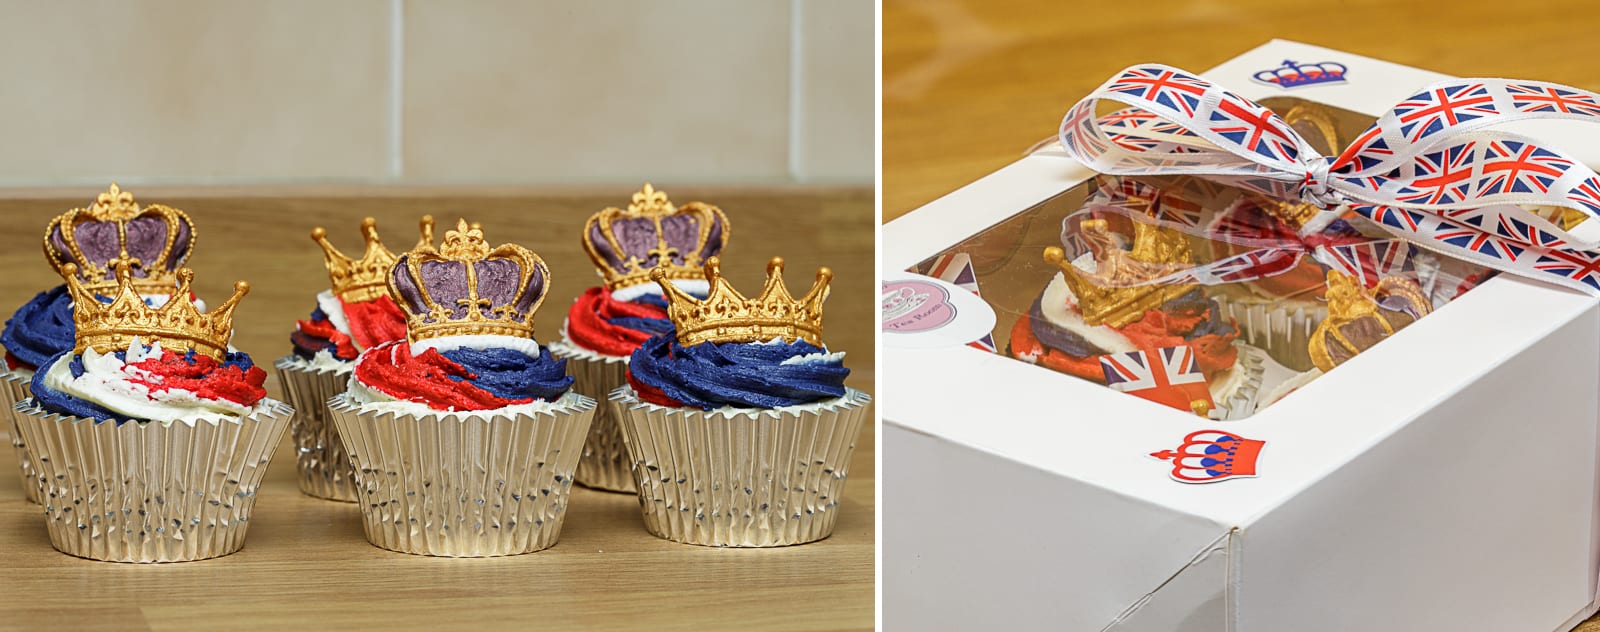 Coronation cupcakes and presentation box